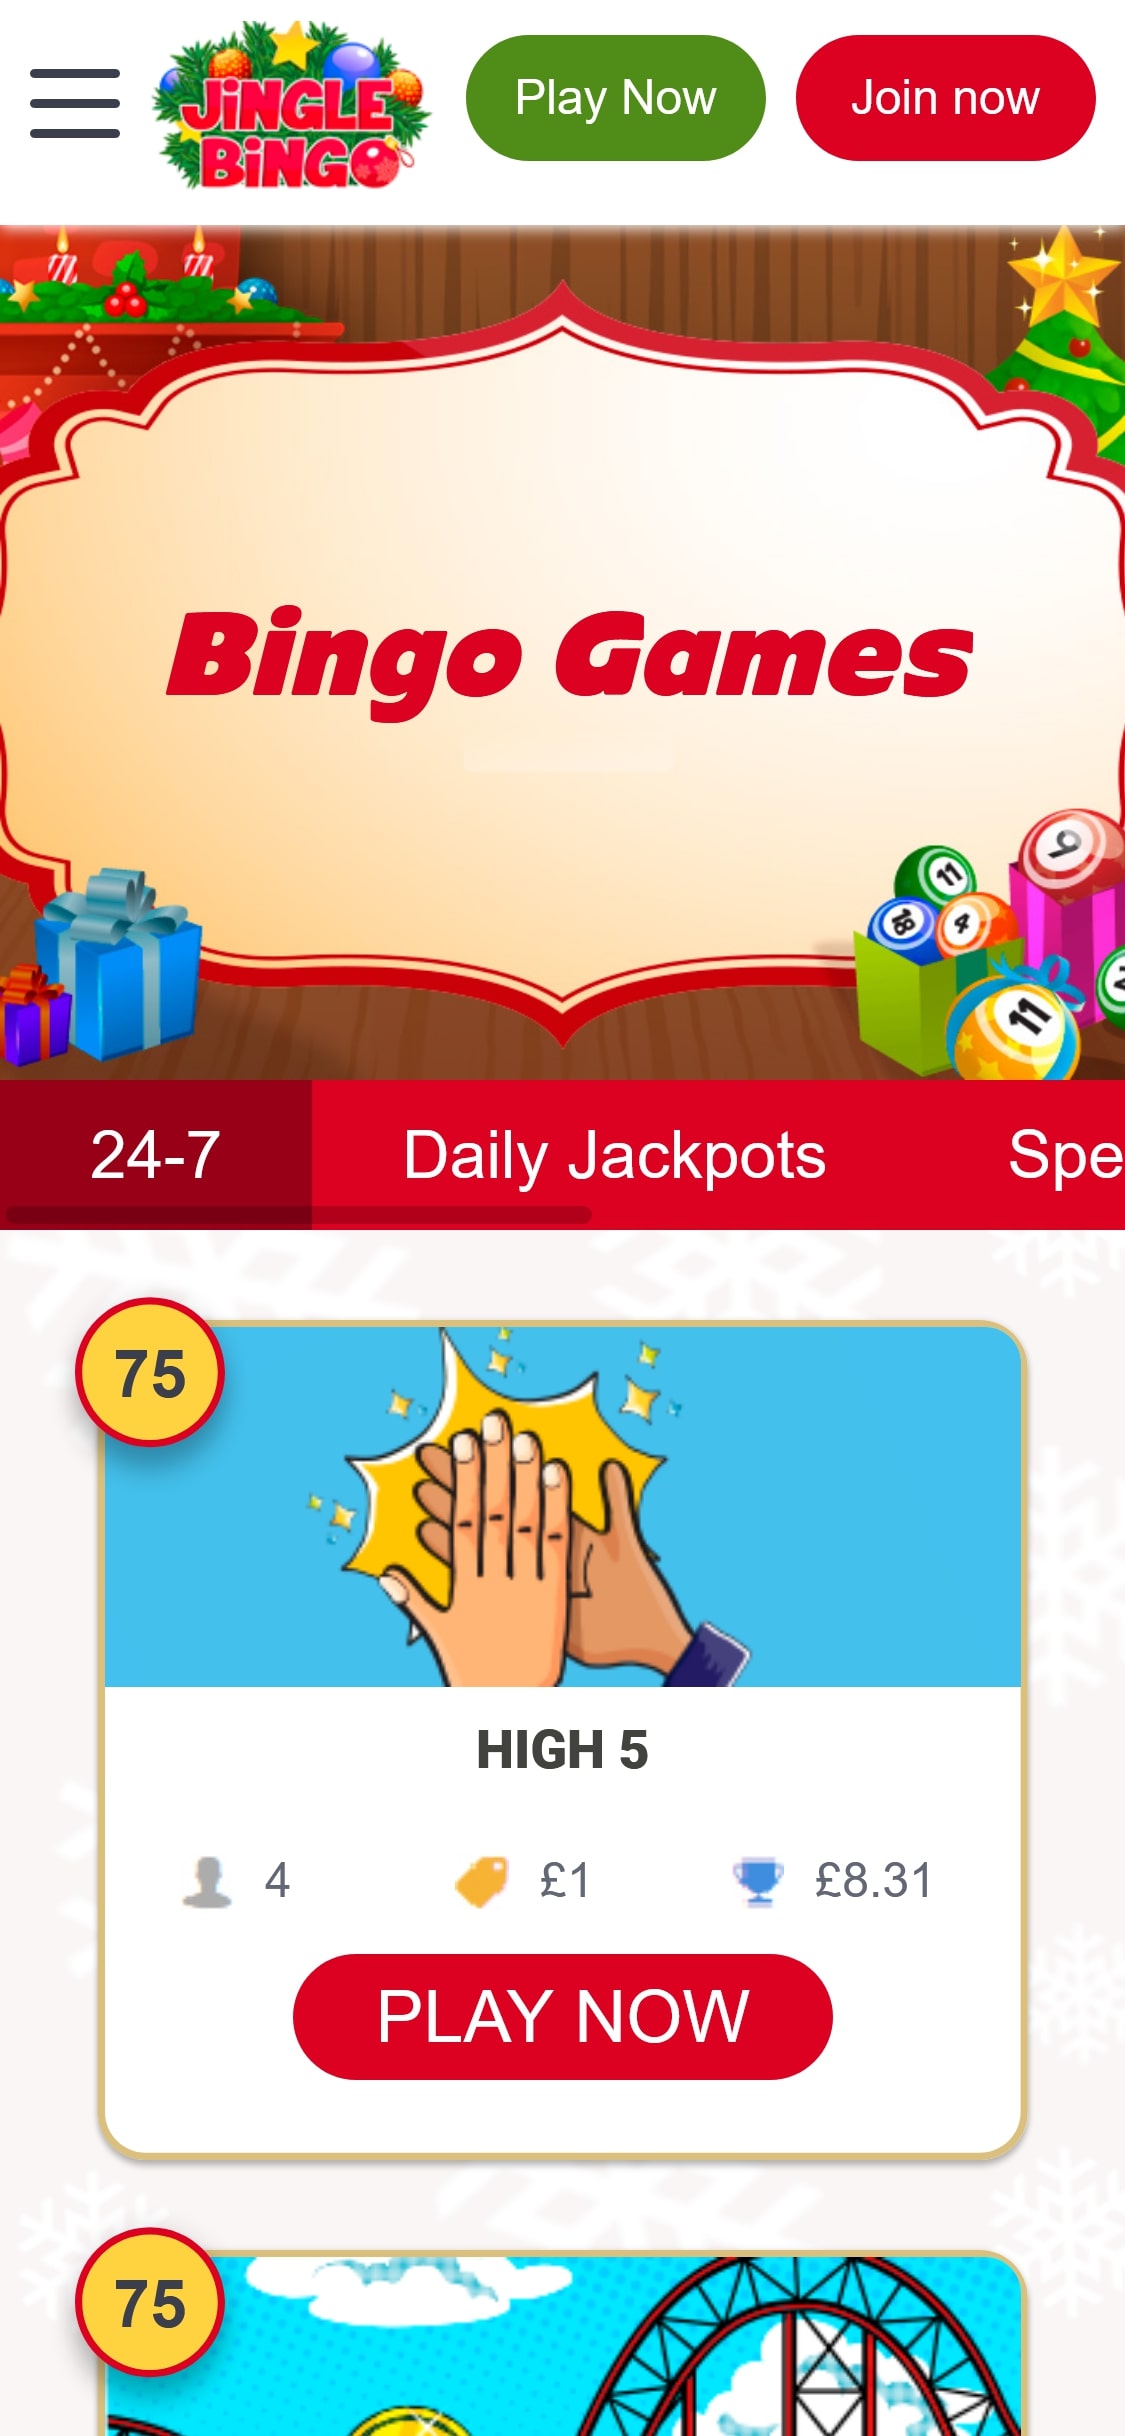 Jingle Bingo Casino Mobile Games Review